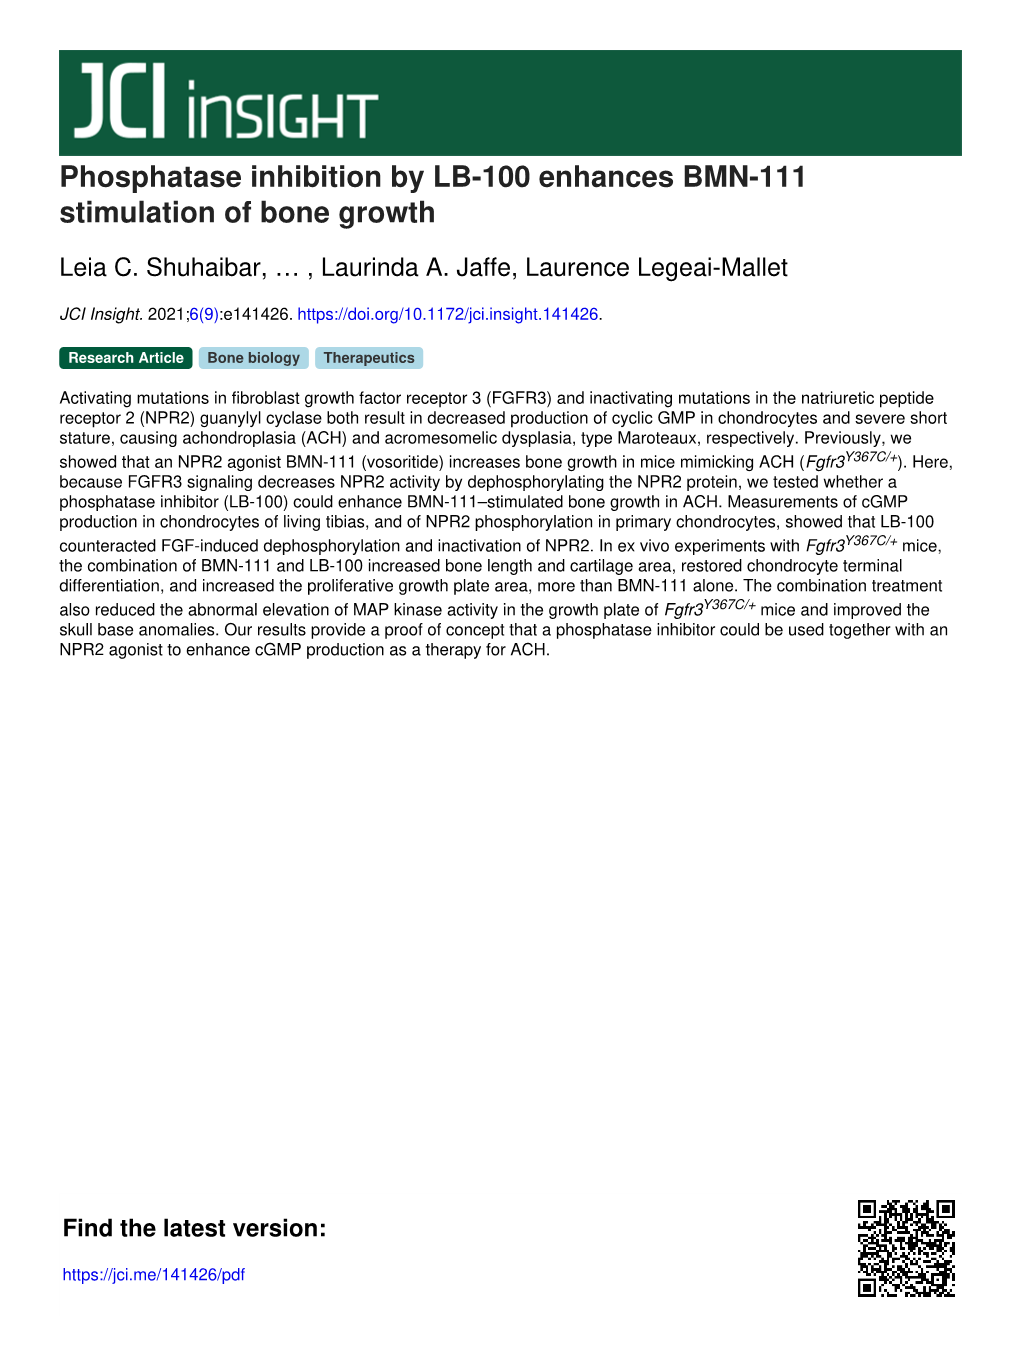 Phosphatase Inhibition by LB-100 Enhances BMN-111 Stimulation of Bone Growth